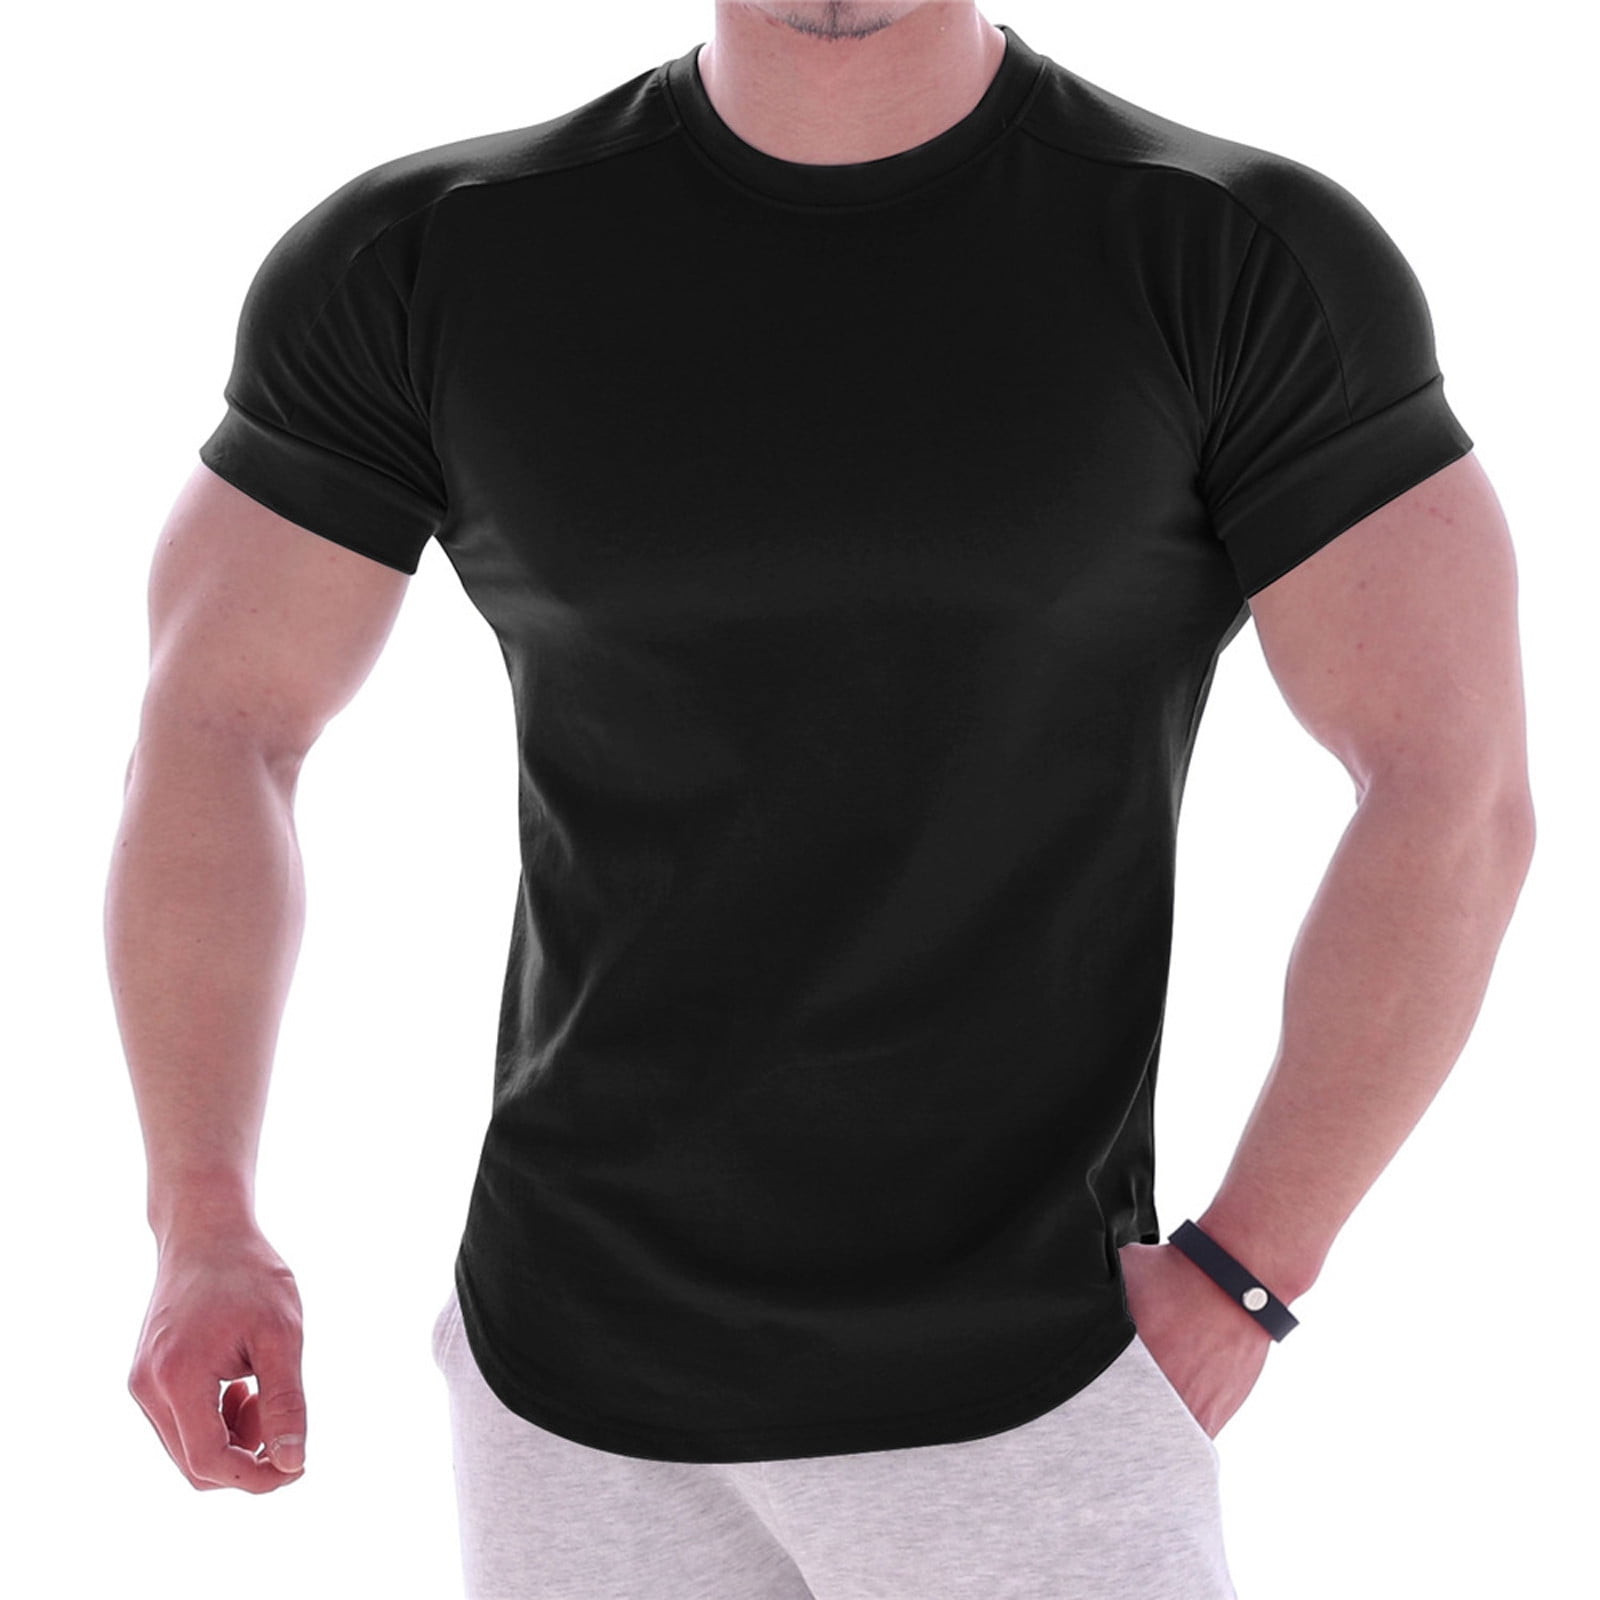 KIJBLAE Sales Men's Fitness T-Shirt Short Sleeve Tee Tops Casual